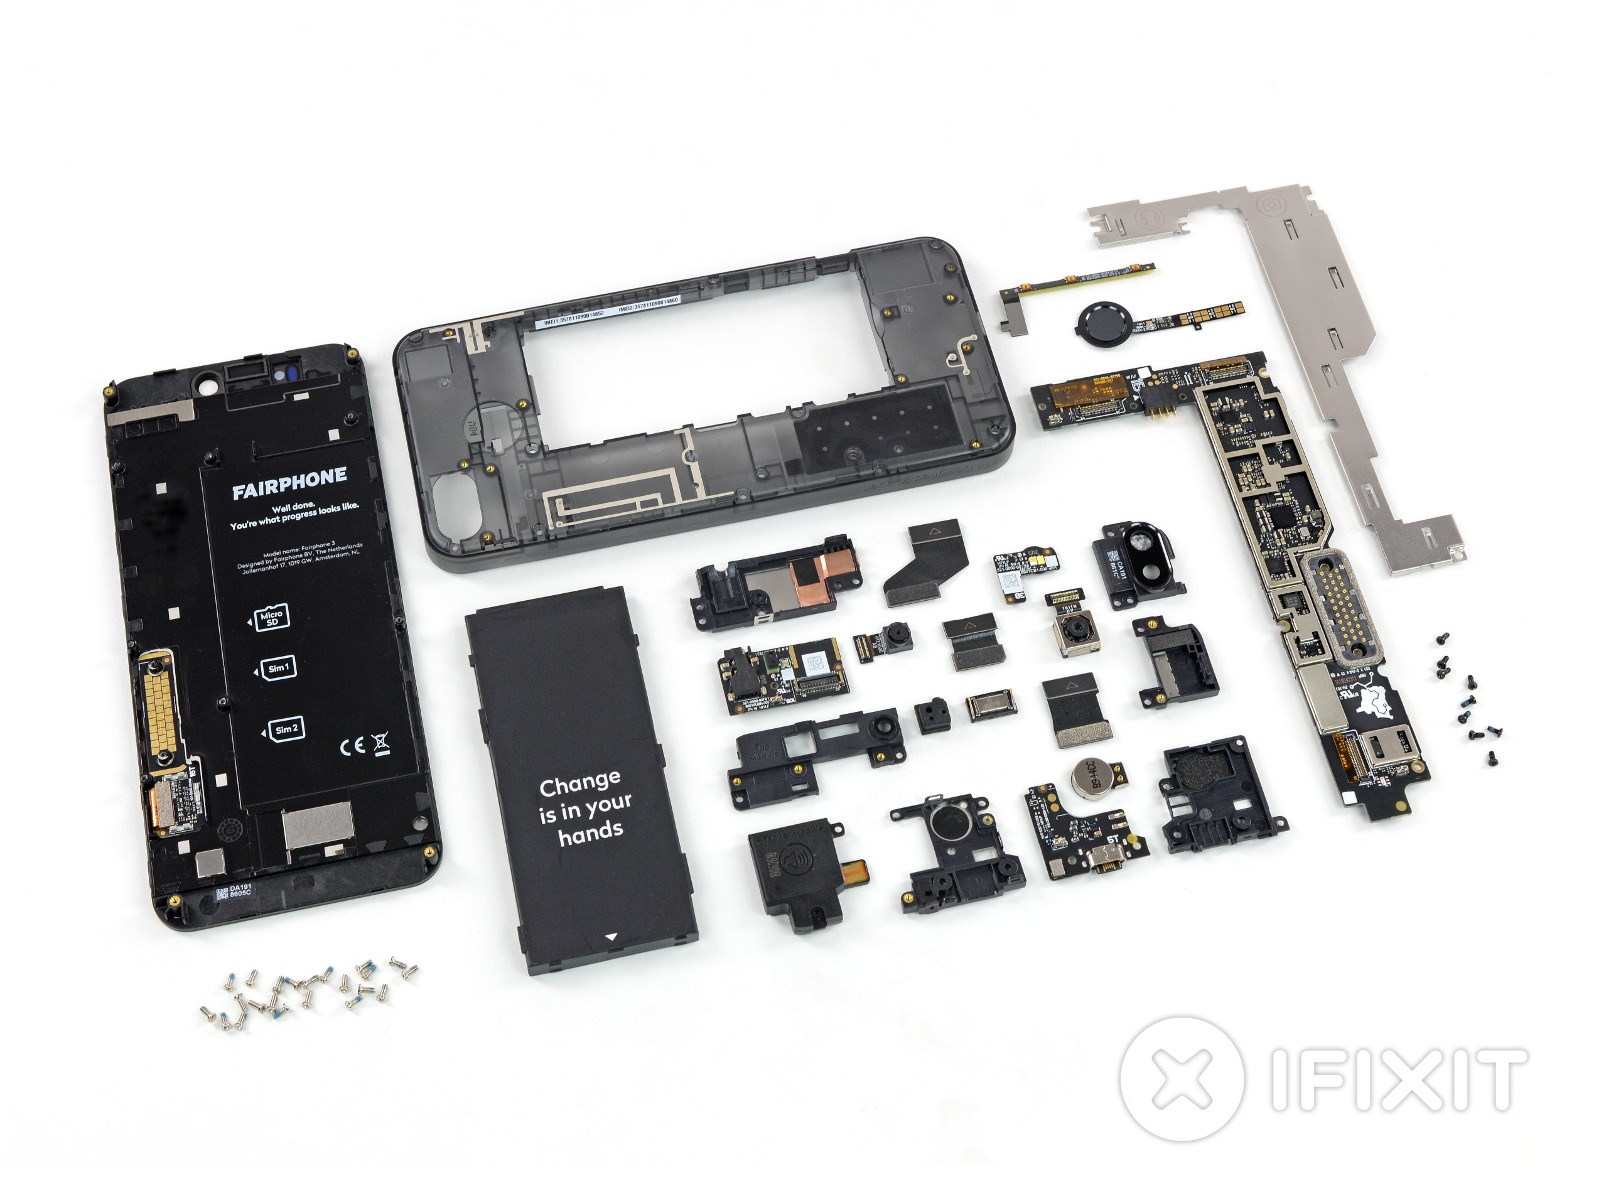 Fairphone 3+ è lo smartphone dei sogni per riparabilità: da 10 e lode per iFixit (foto)